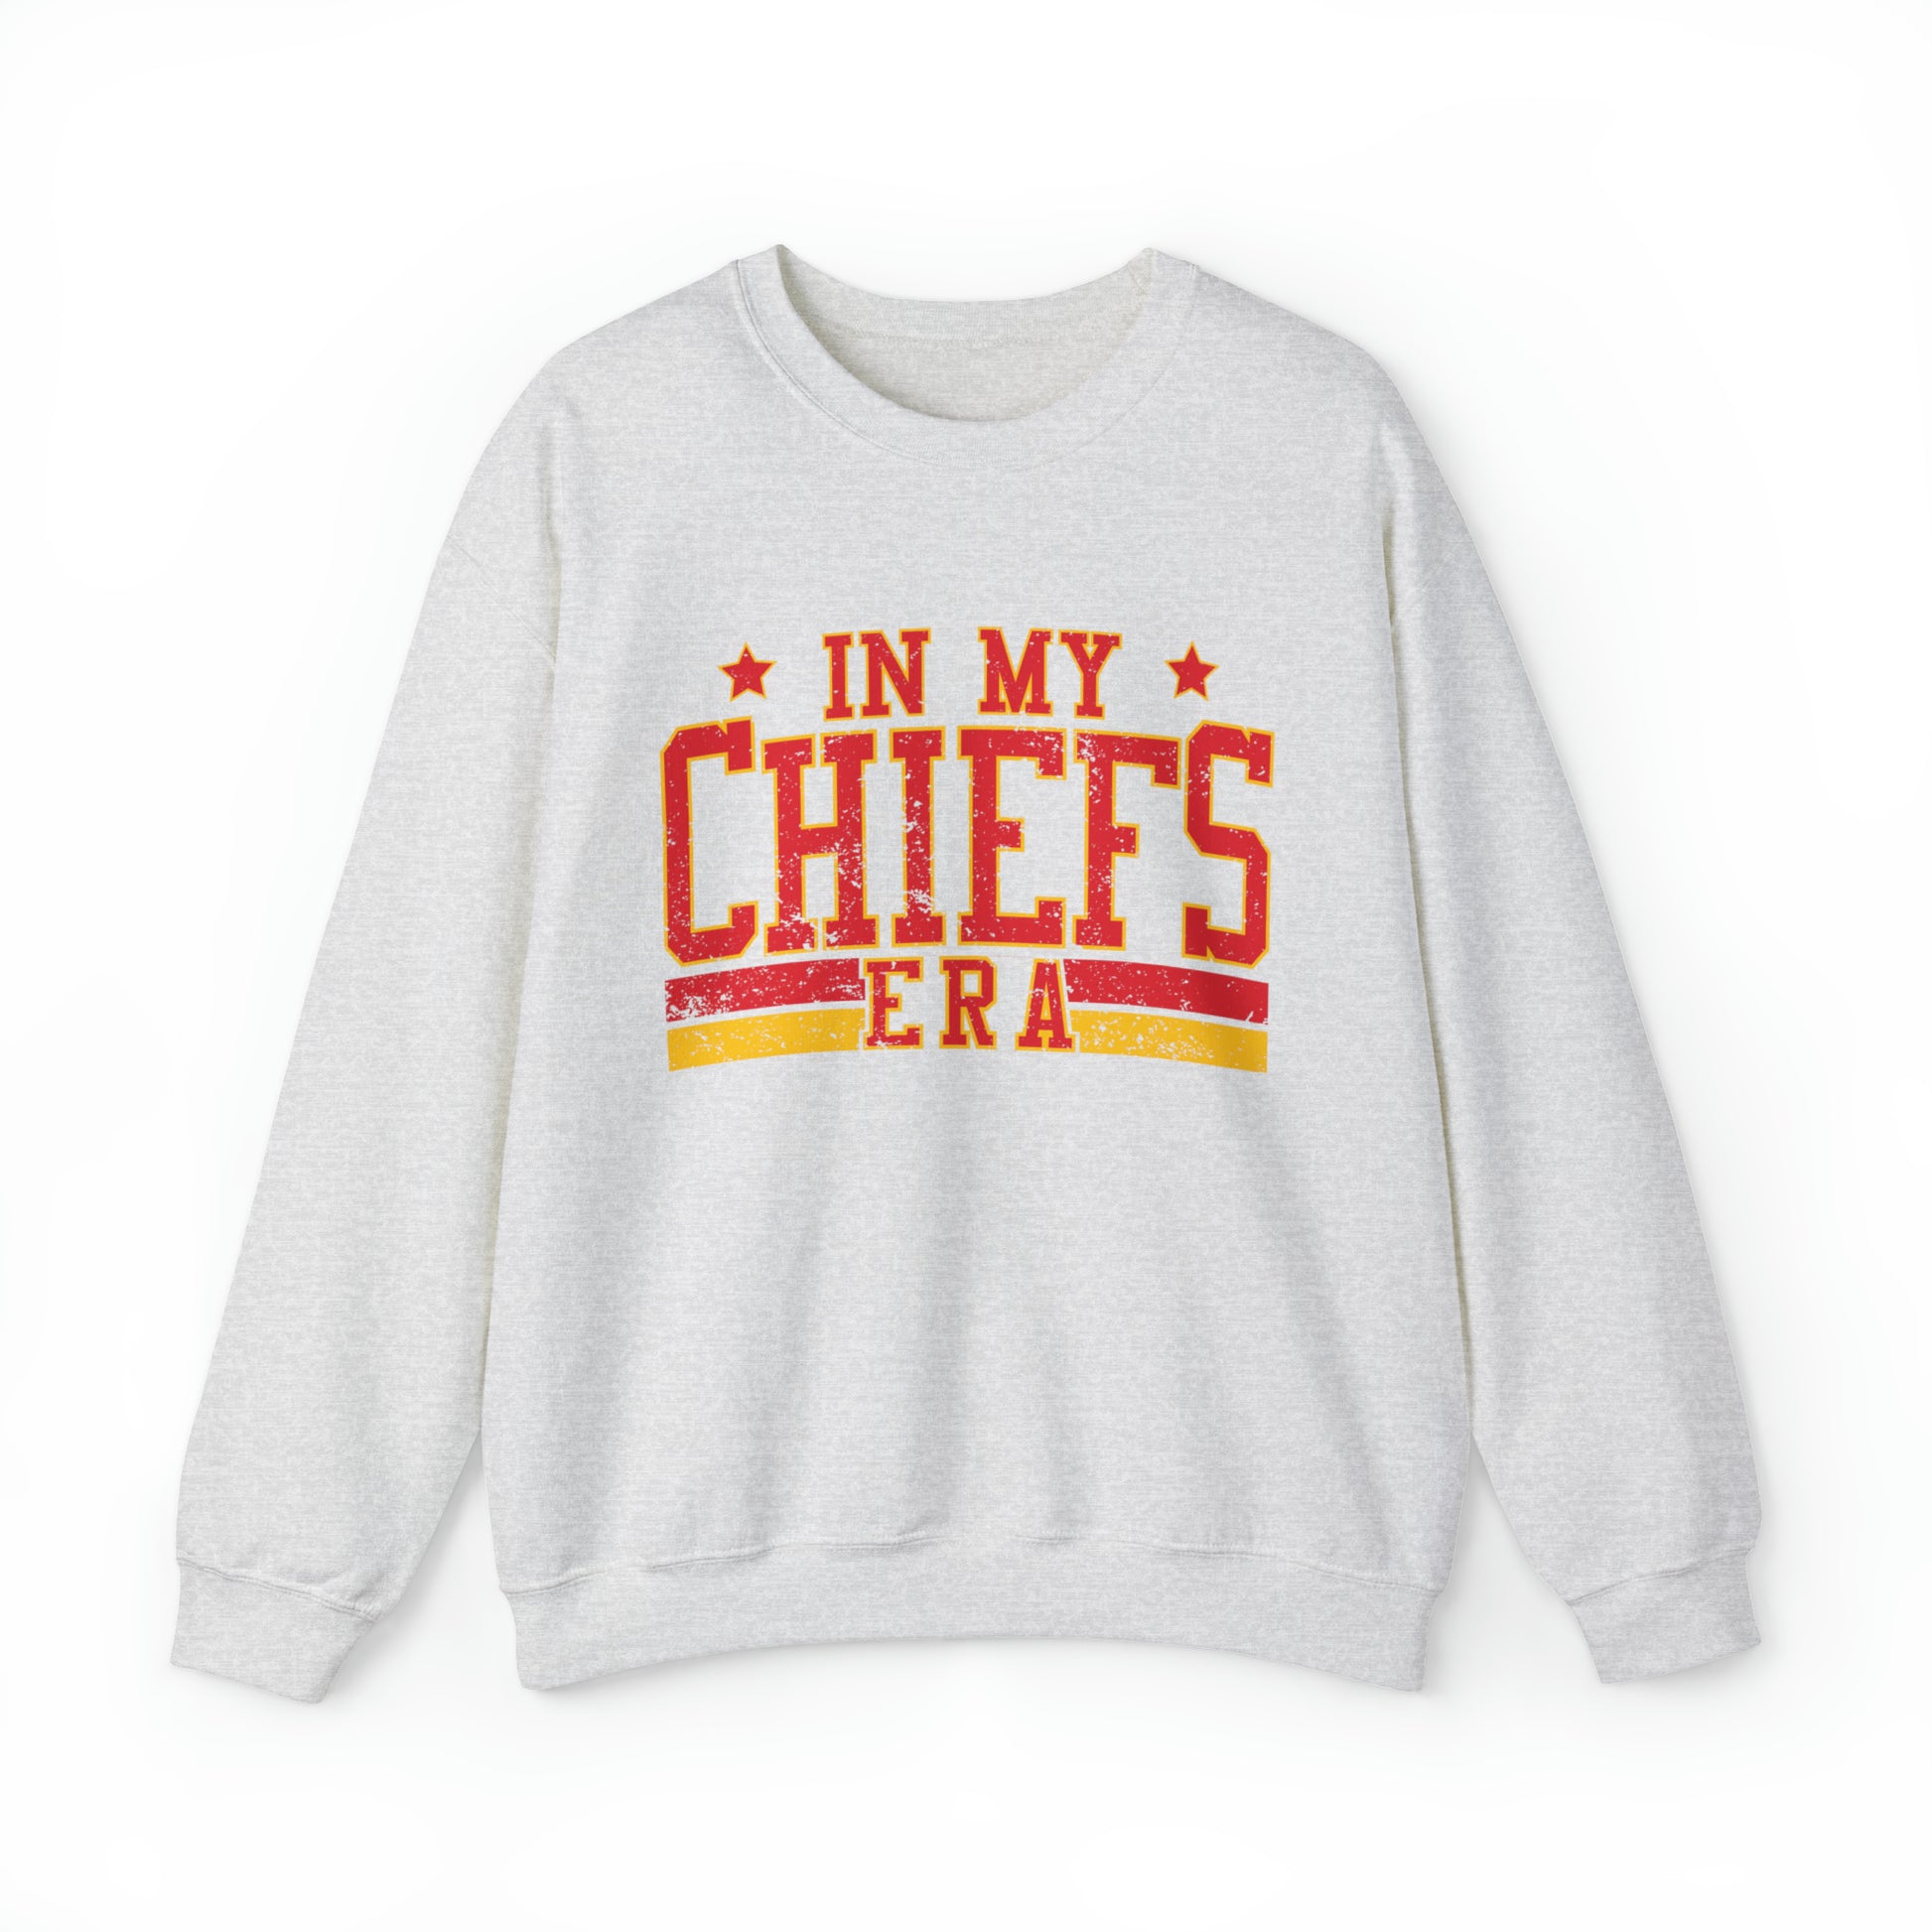 Jessie K's on Instagram: In My Chiefs Era Sweatshirt Available in